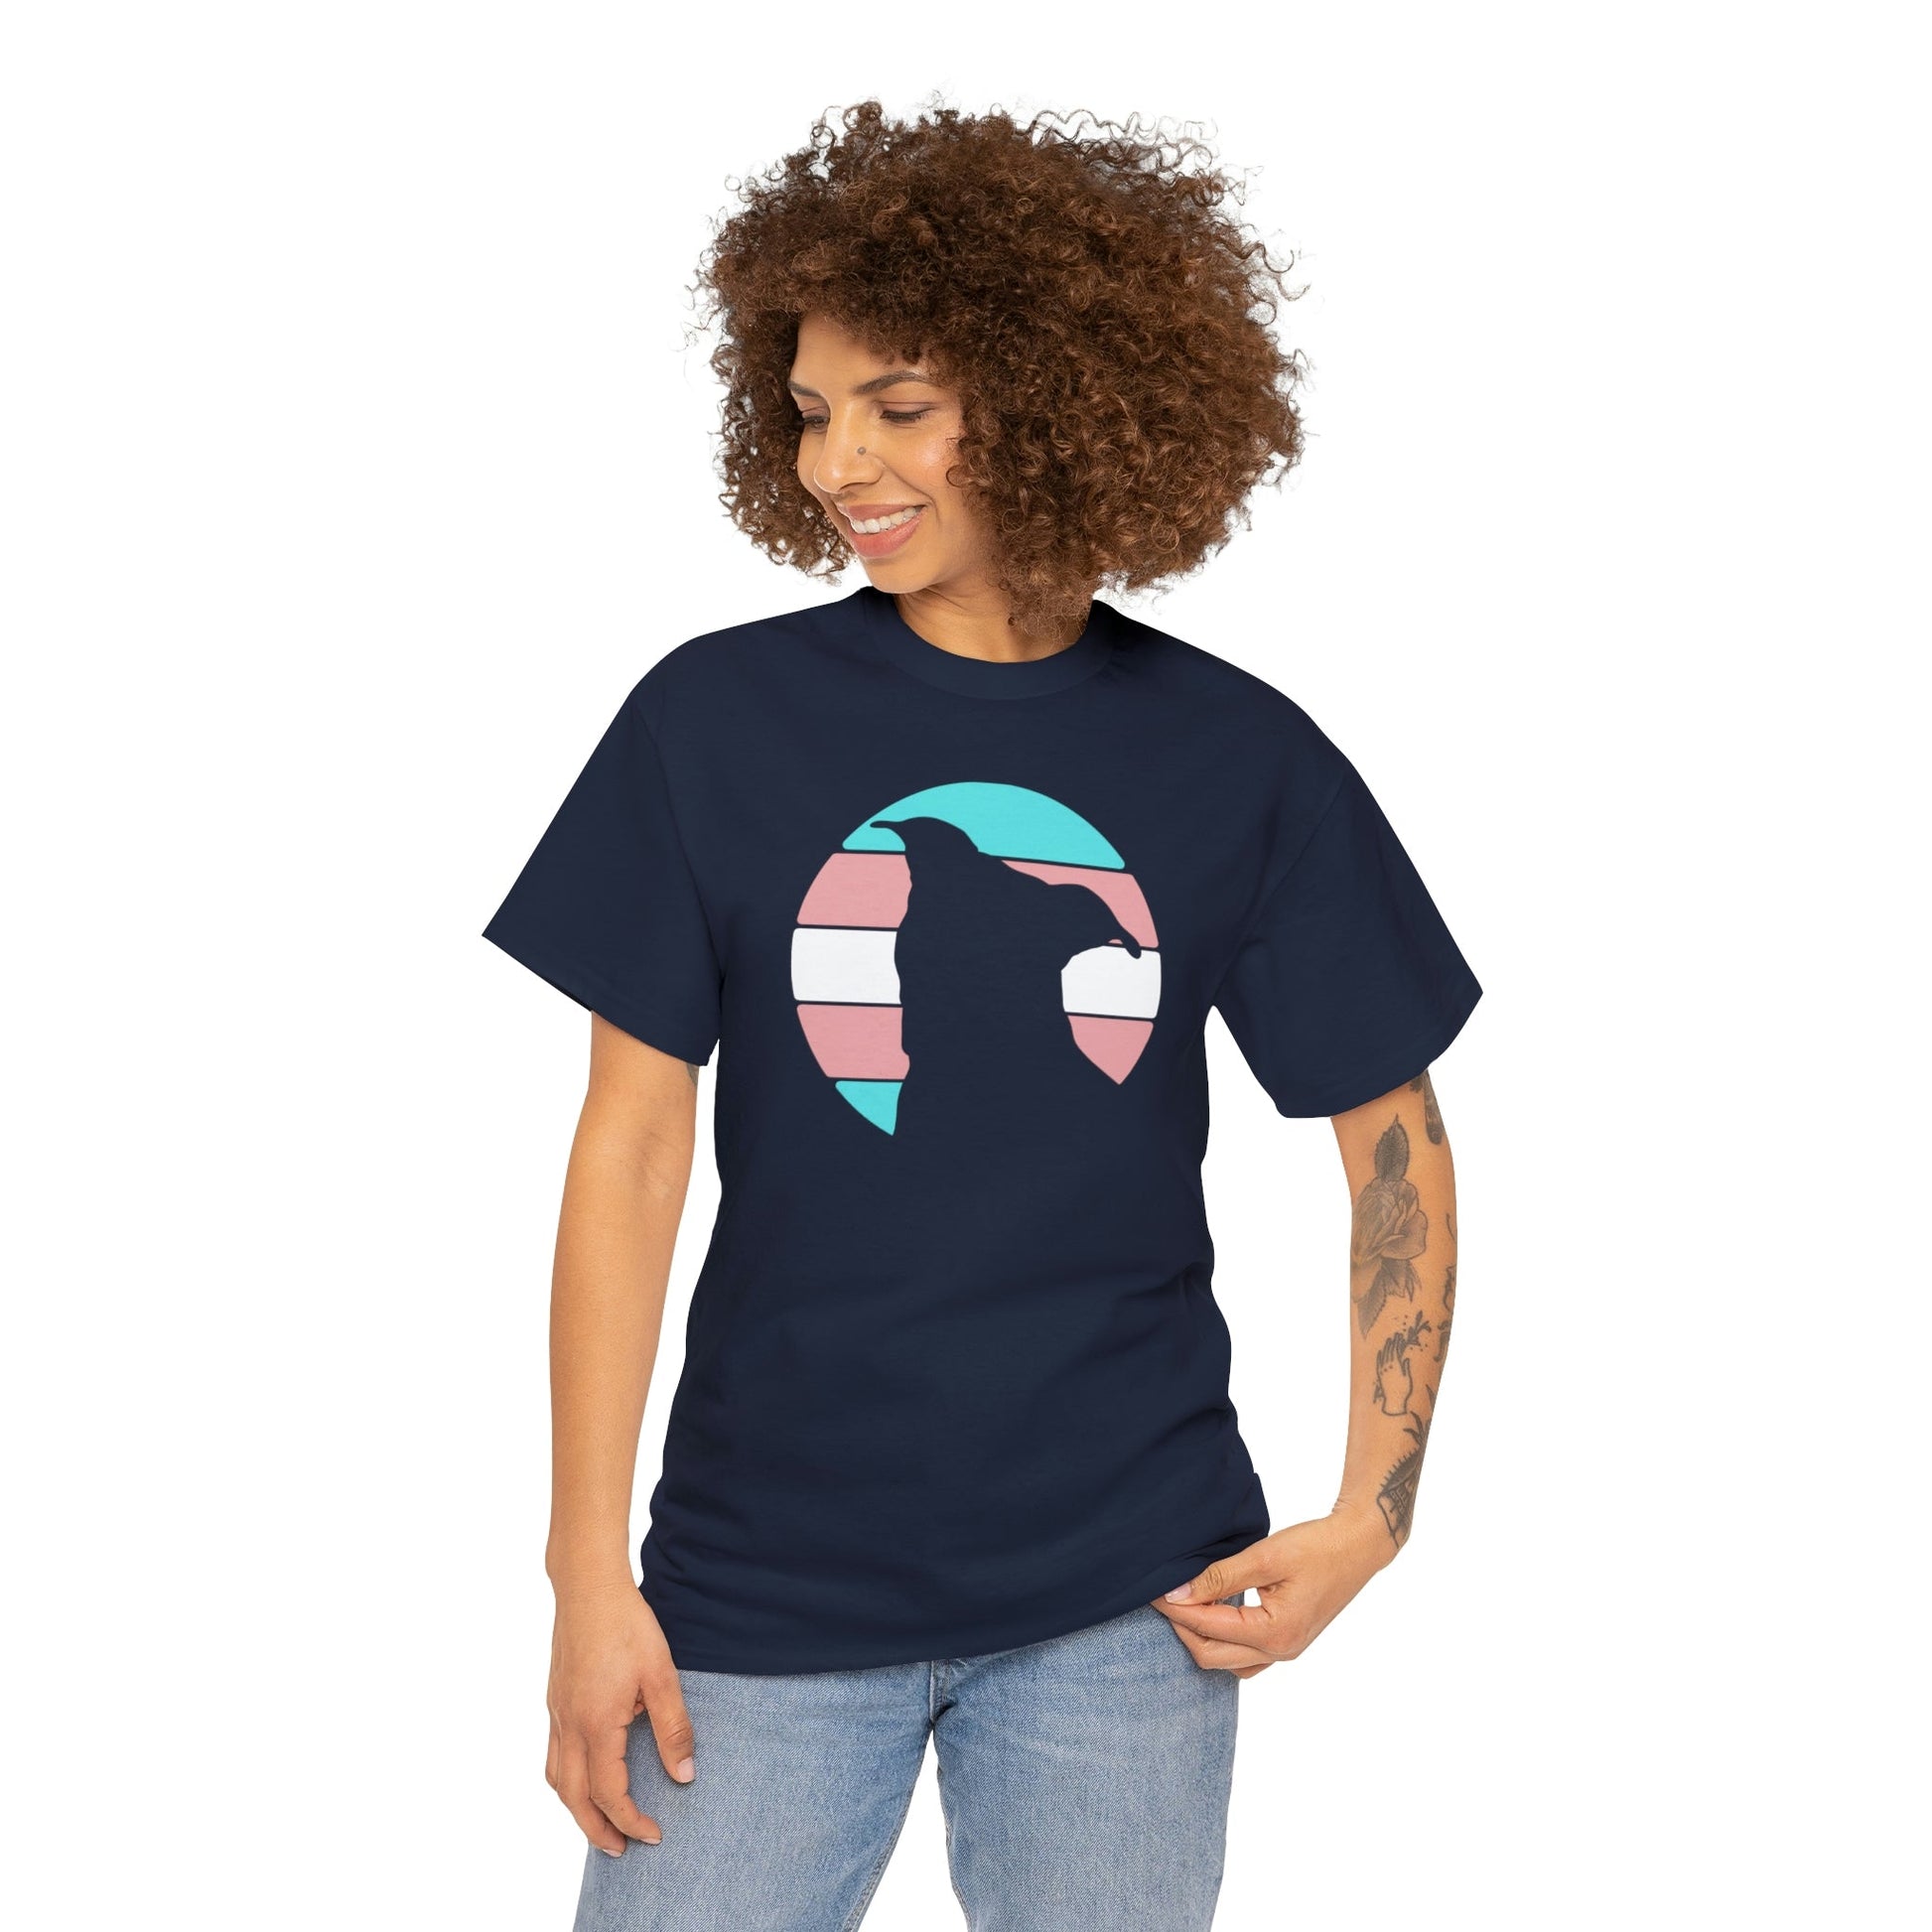 Trans Pride | Pit Bull Silhouette | T-shirt - Detezi Designs-55606099955236338380